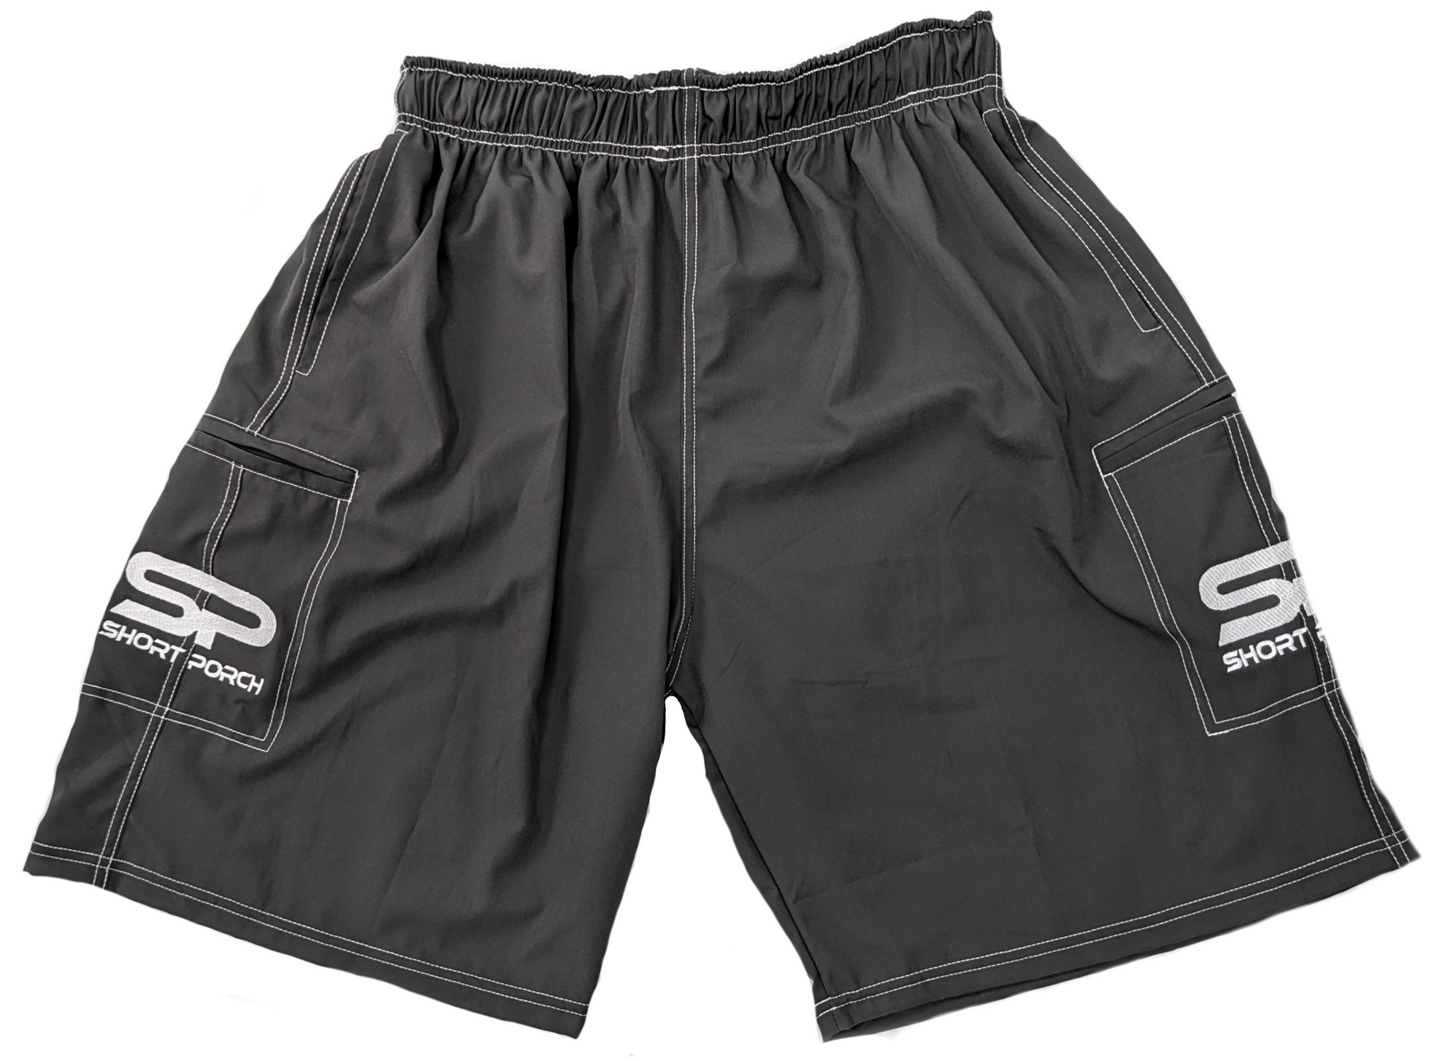 SP Men's Shorts